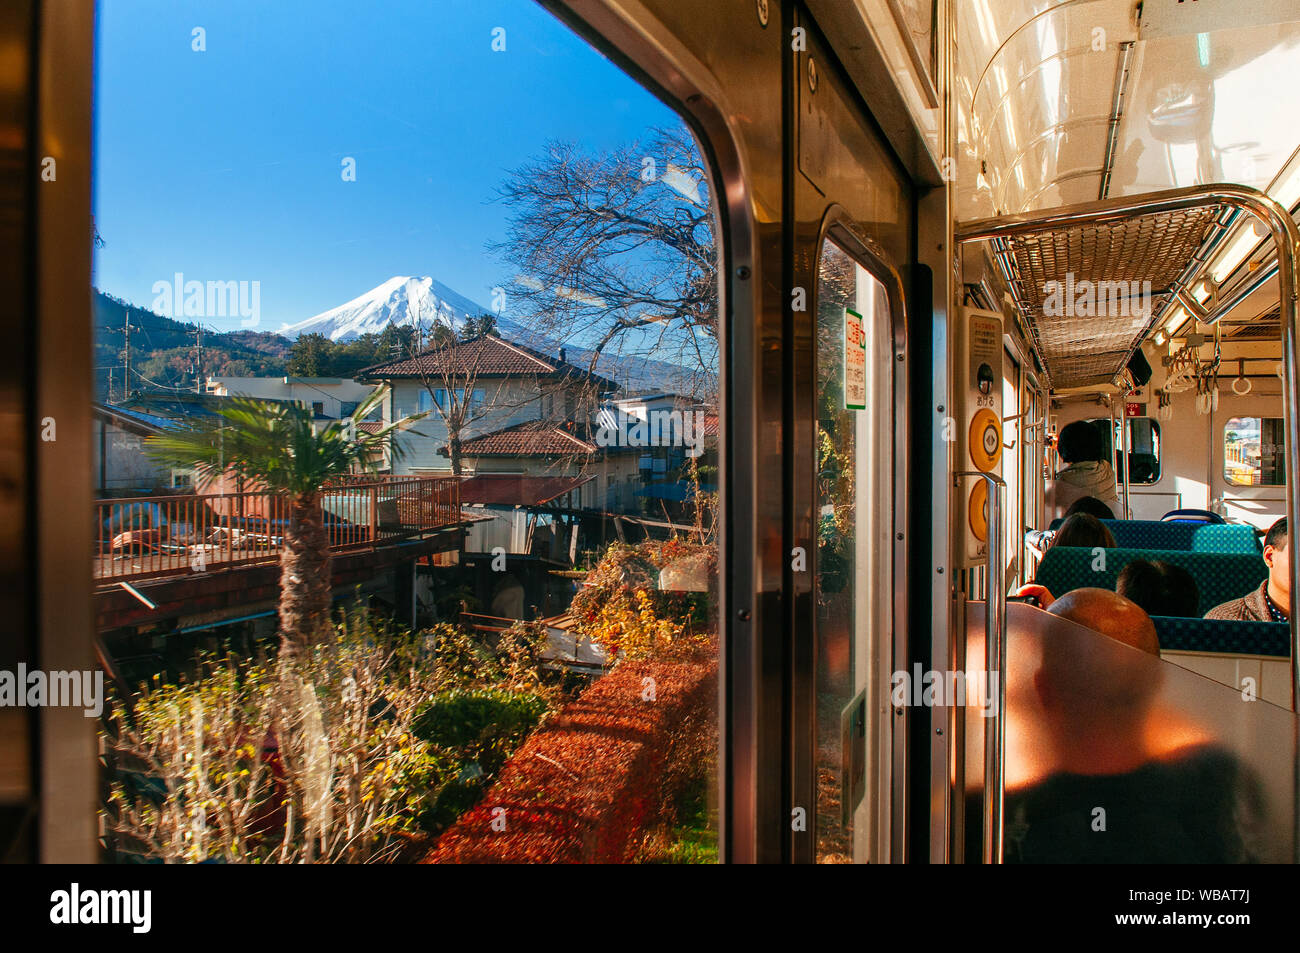 NOV 30, 2018 Fujiyoshida, Japan - Snow covered Mount Fuji behind local town along train route from Tokyo to Kawaguchiko seen through train window with Stock Photo